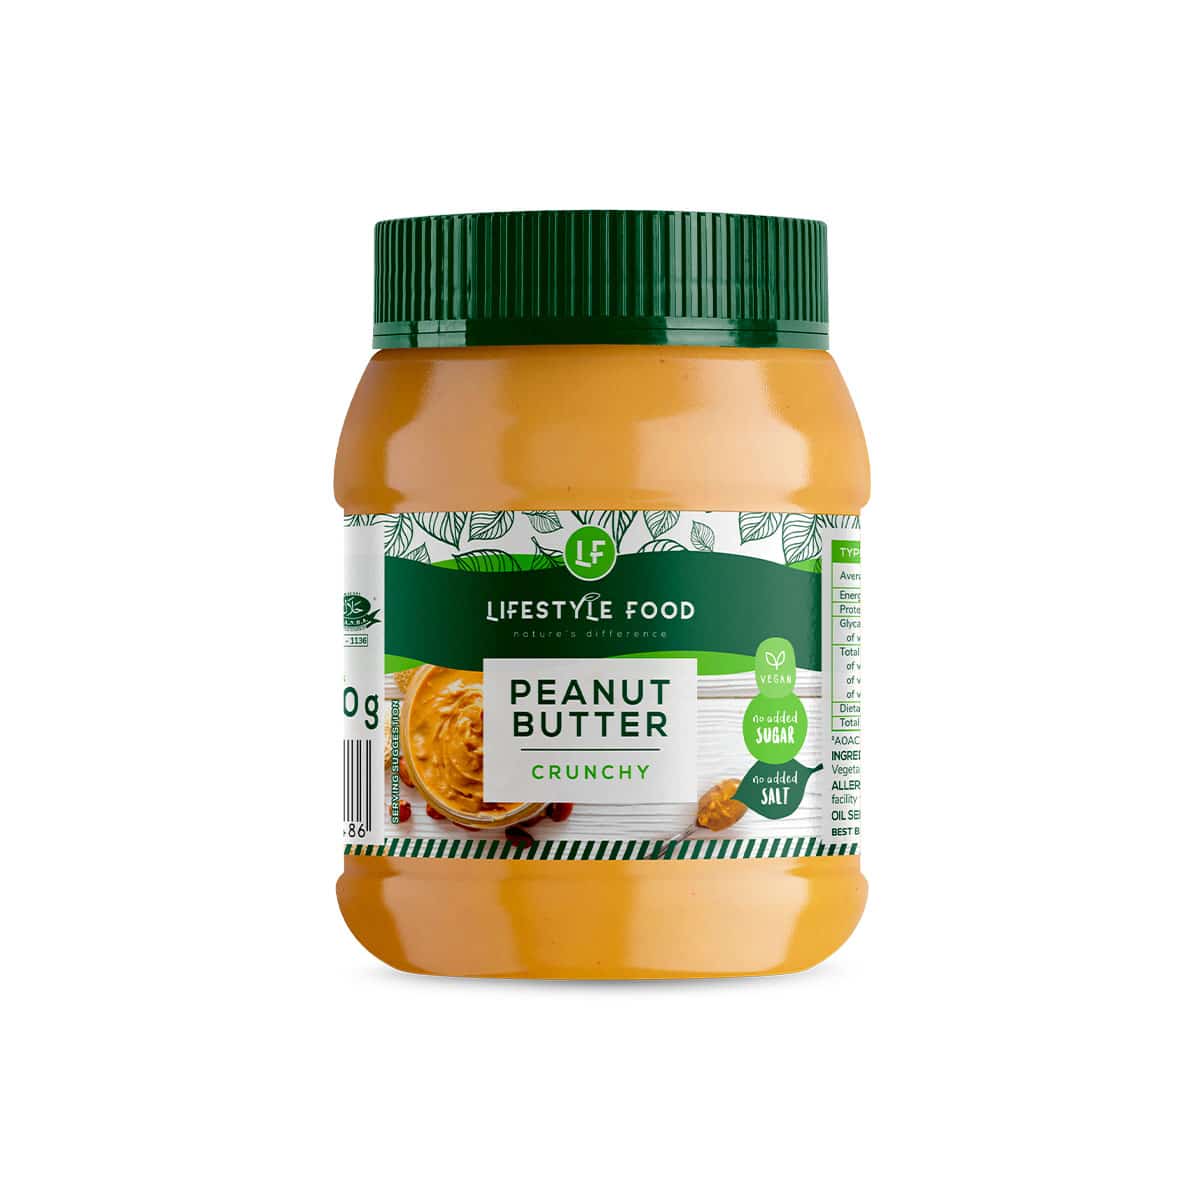 Lifestyle Food Peanut Butter Crunchy - 380g